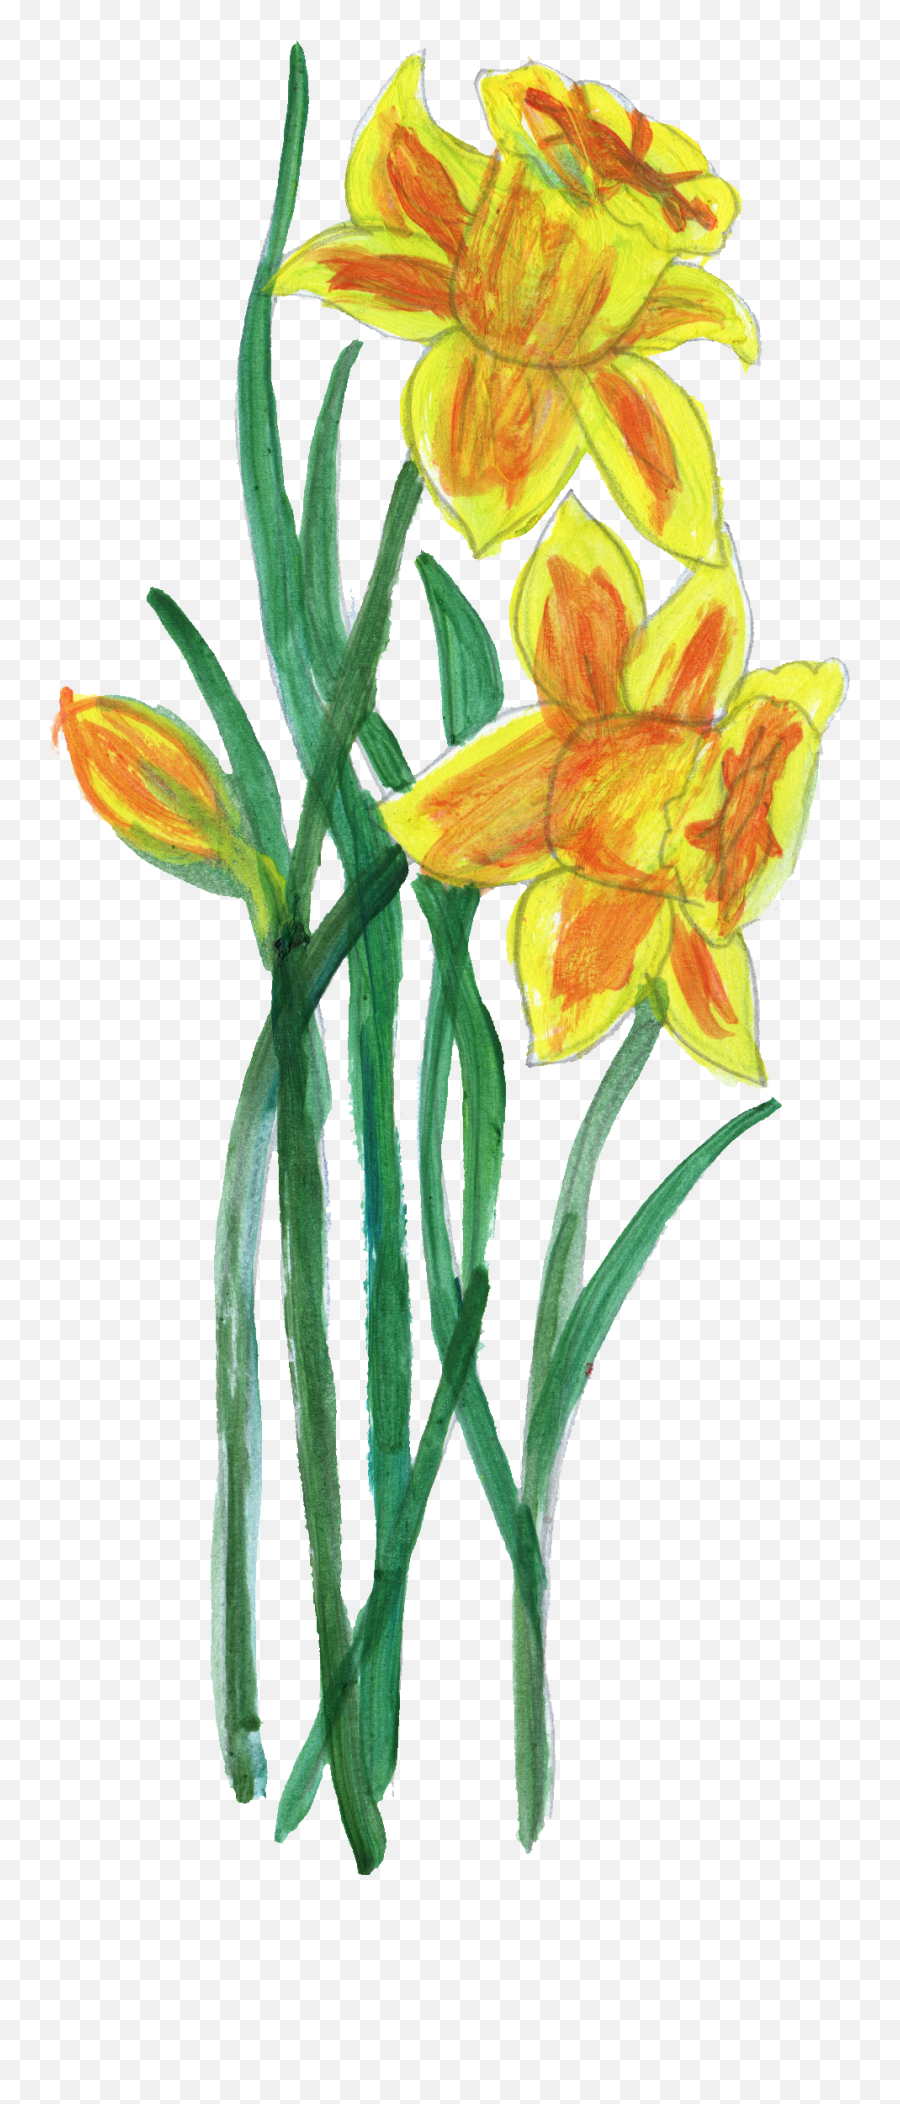 10 Paint Flower Png Transparent Onlygfxcom - Yellow Paint Flower Png,Lily Flower Png